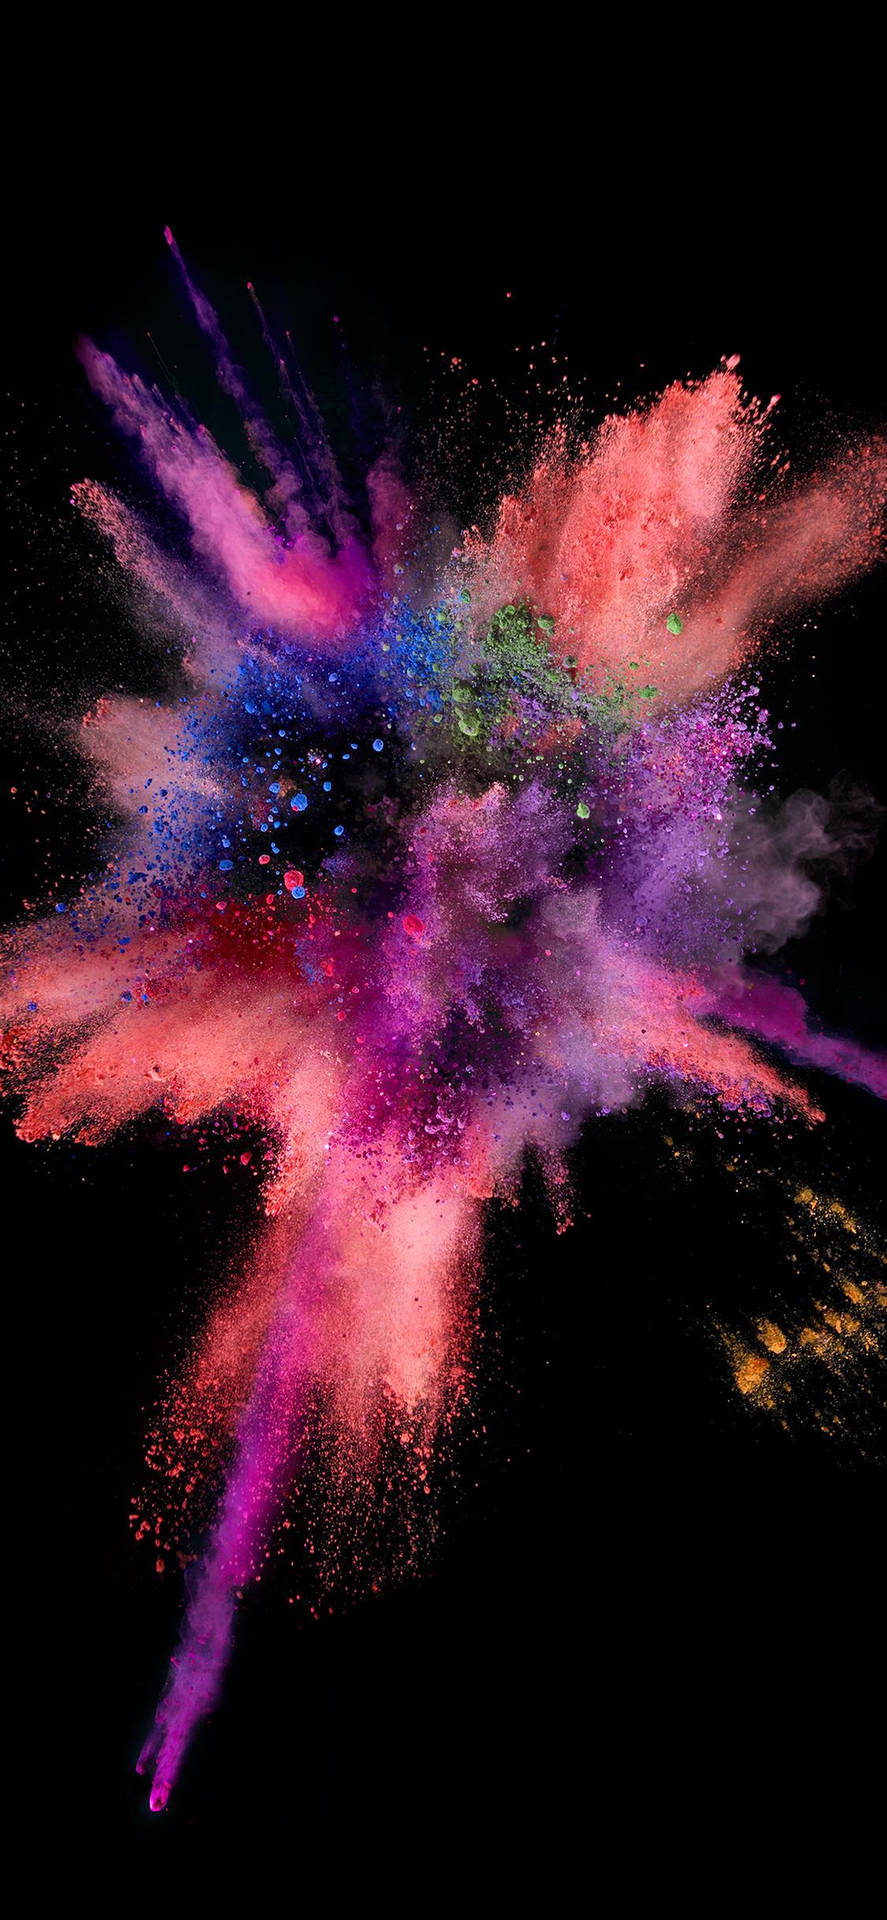 iPhone X Original Colorful Dust Explosion Wallpaper